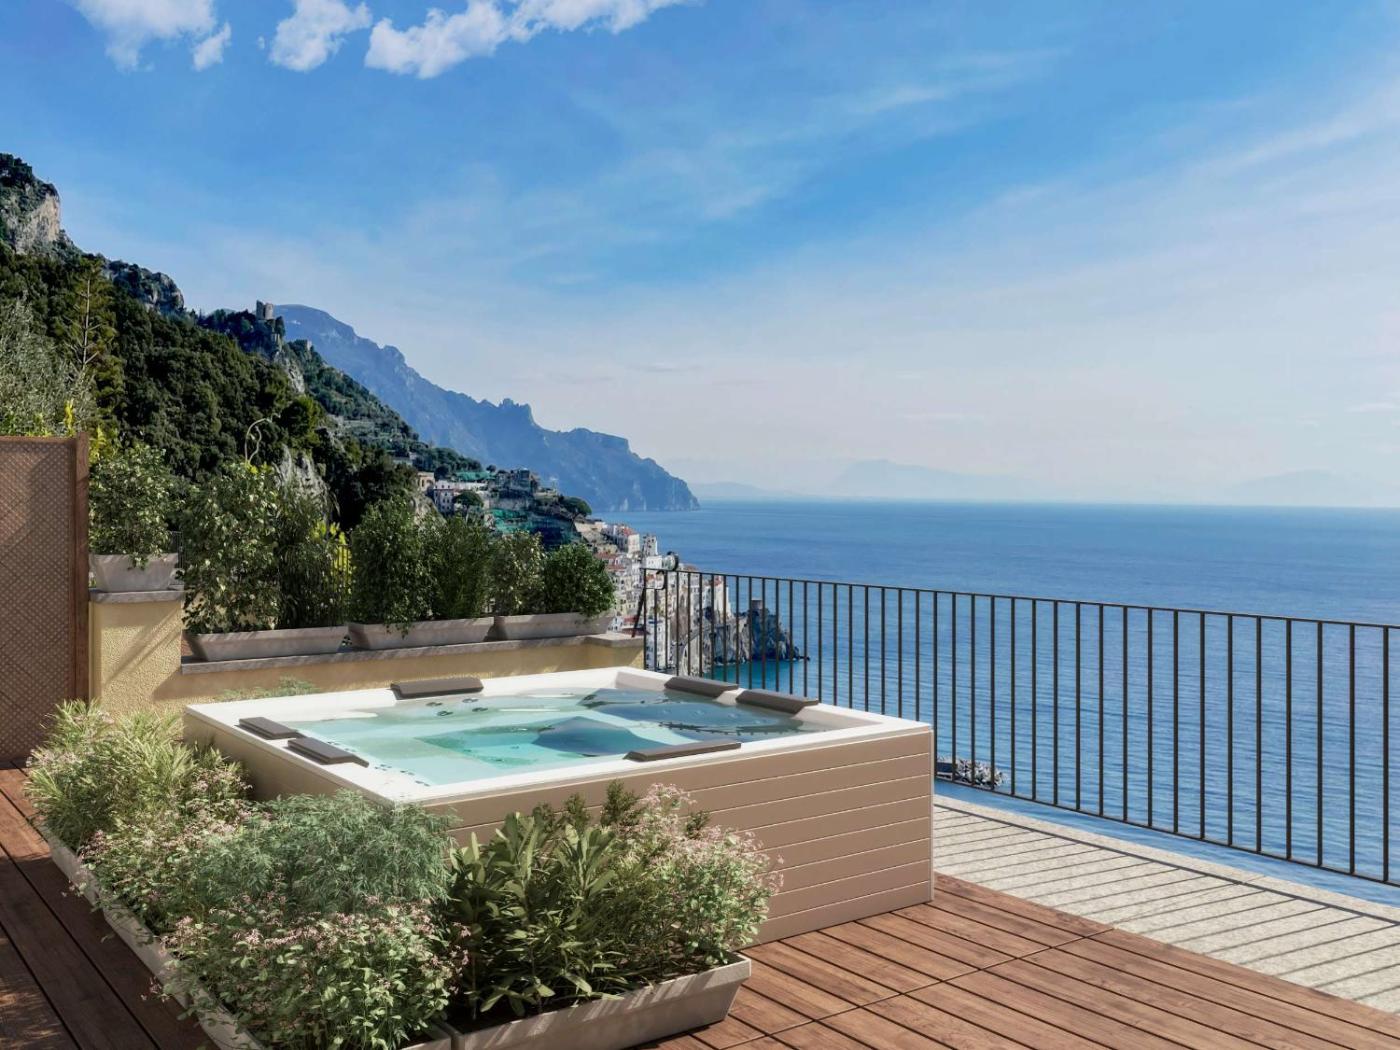 Hotel with private pool - NH Collection Grand Hotel Convento di Amalfi